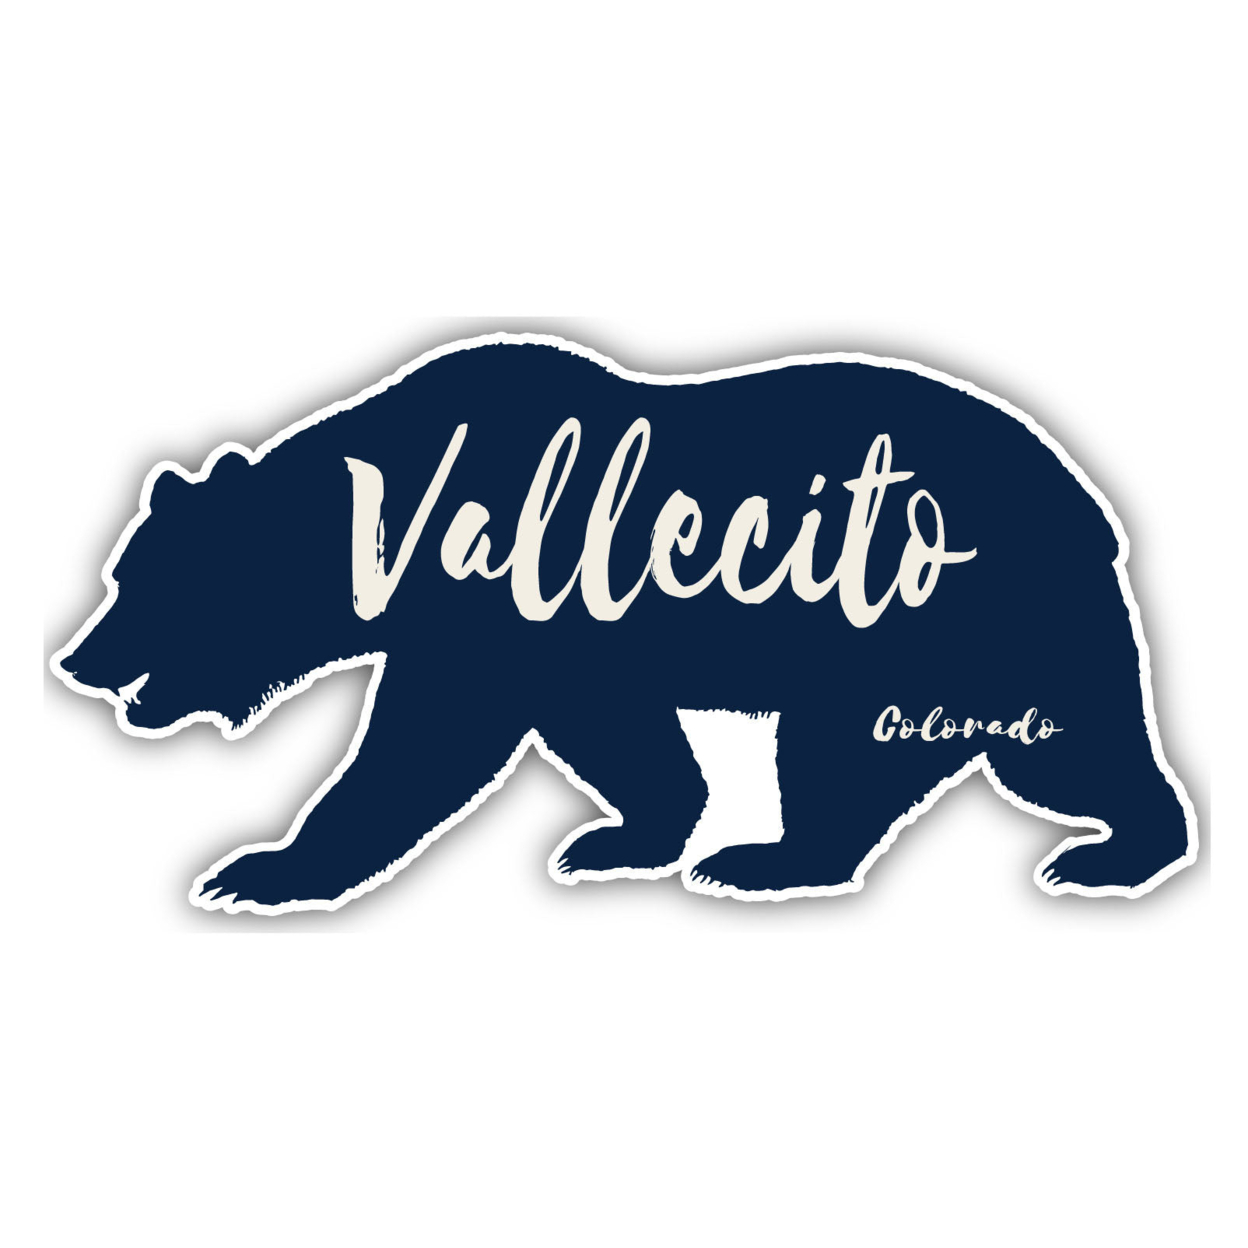 Vallecito Colorado Souvenir Decorative Stickers (Choose Theme And Size) - Single Unit, 2-Inch, Bear